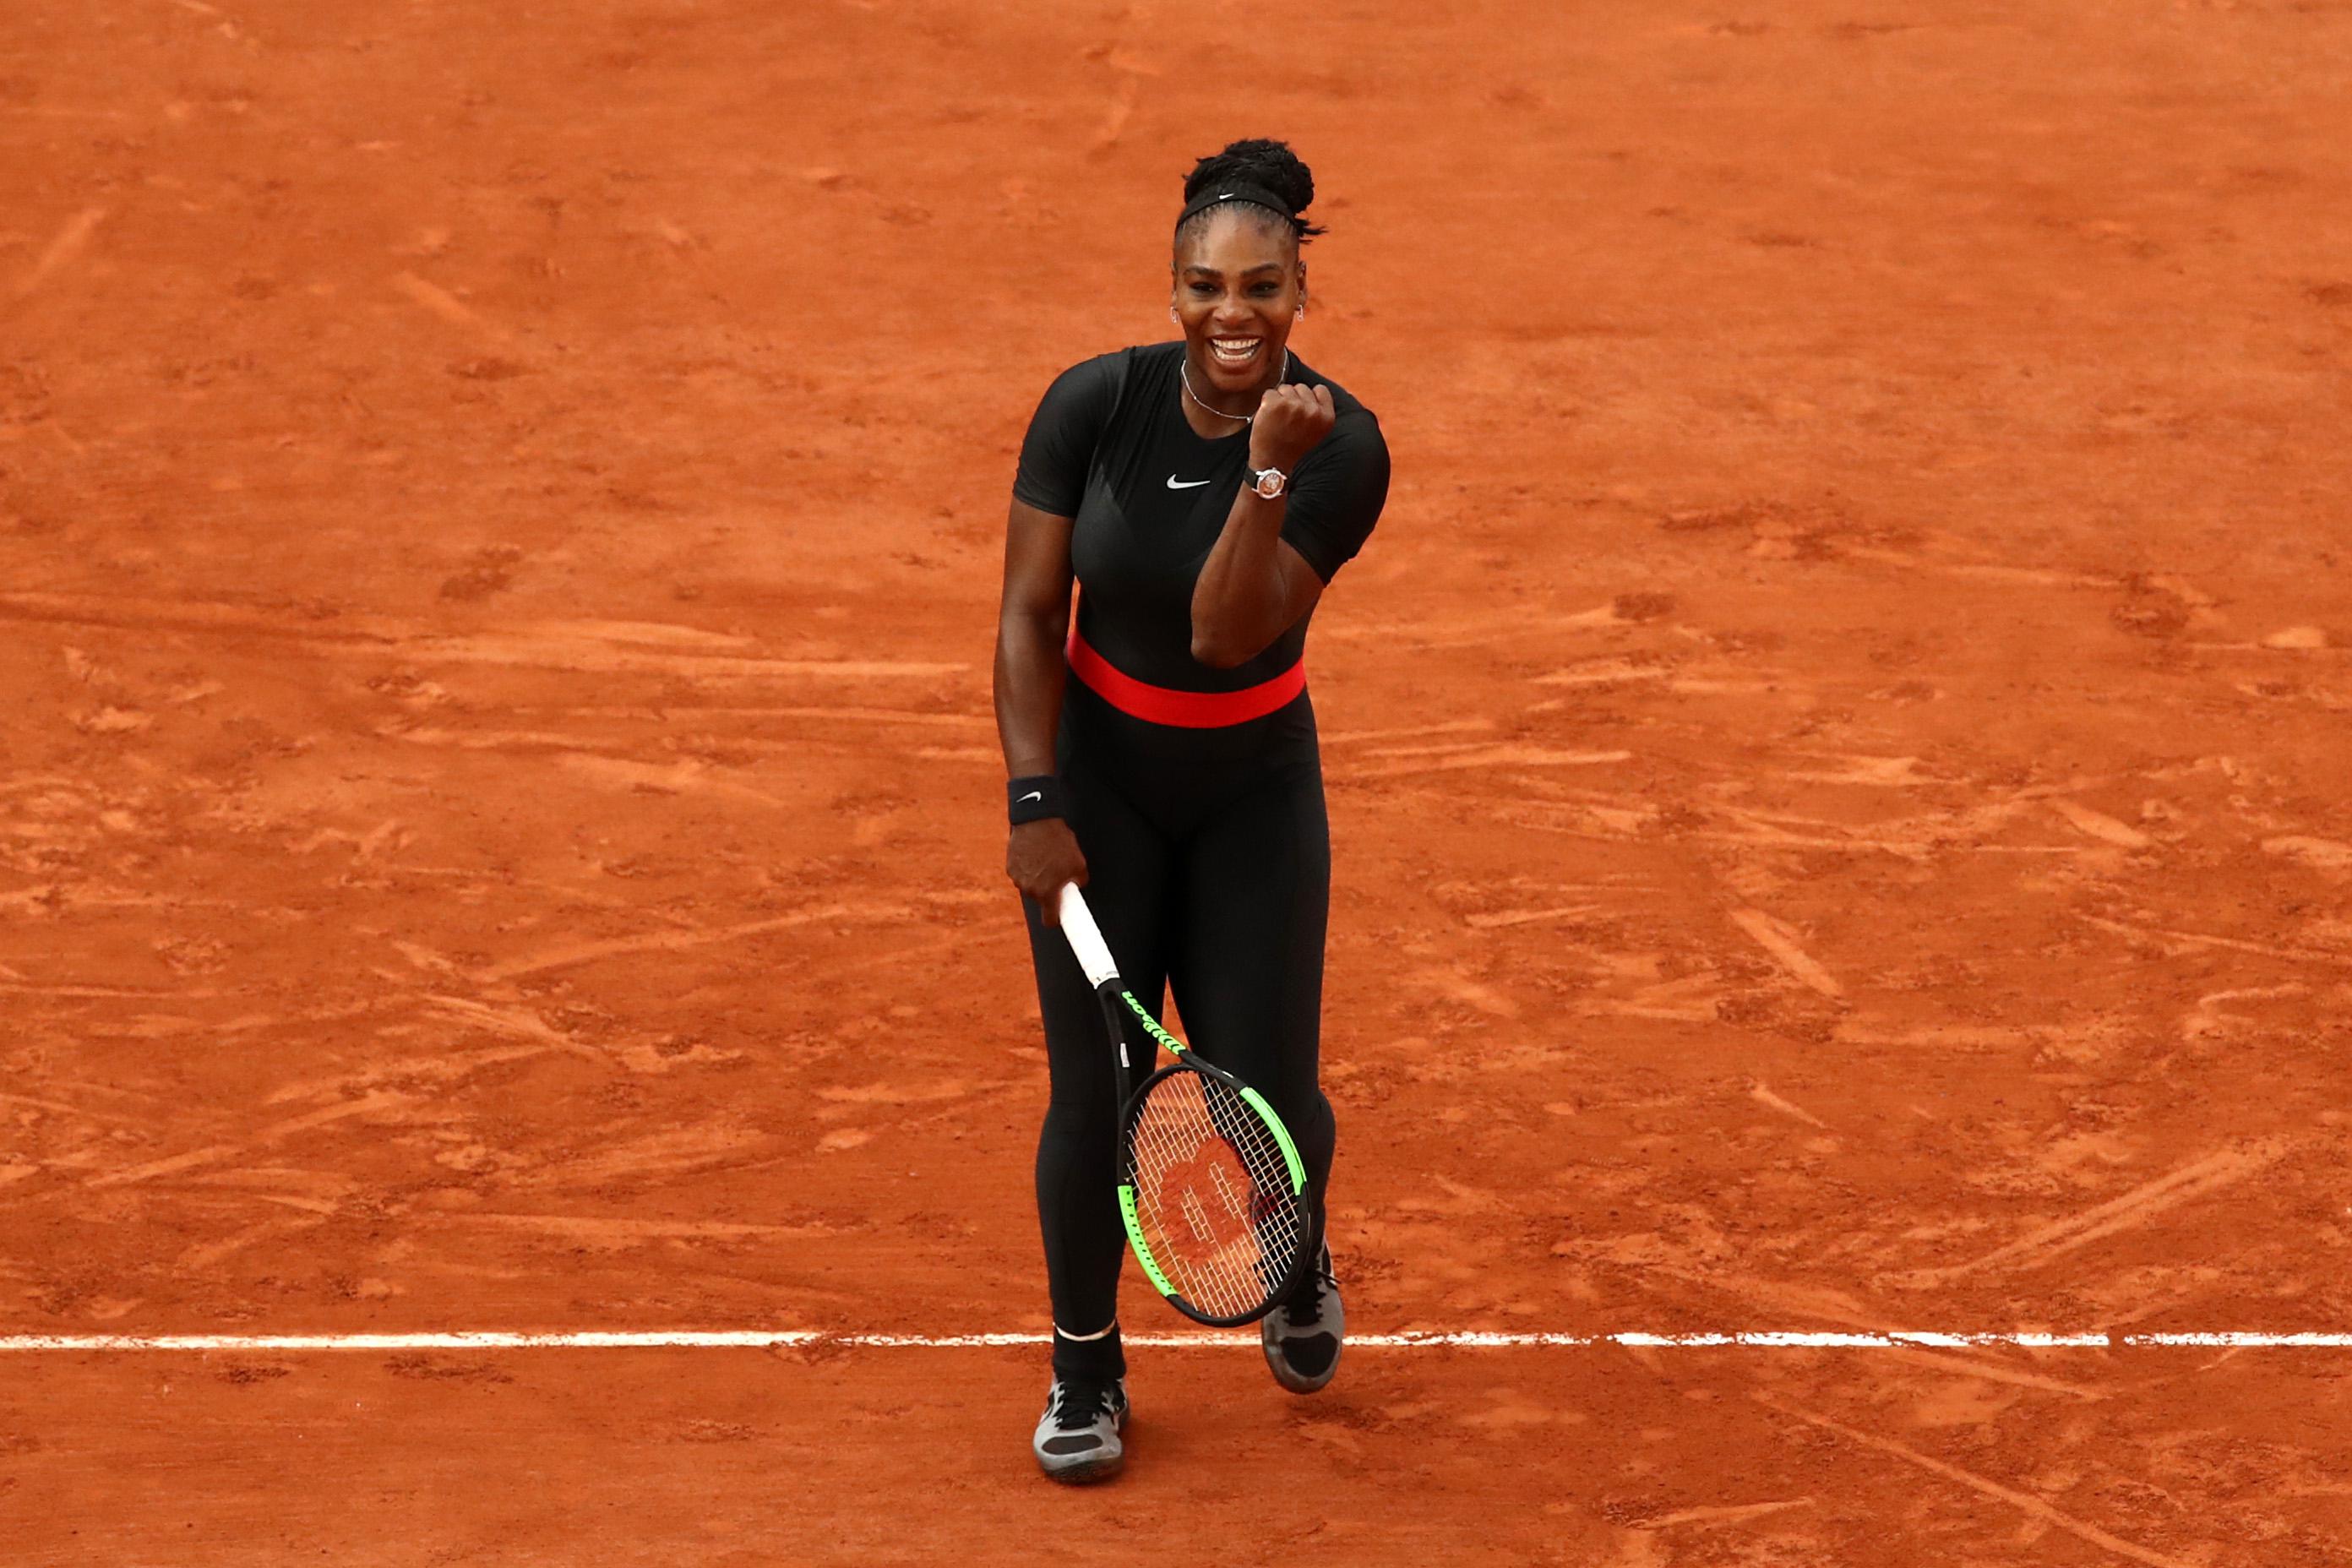 Serena Williams, wearing a black bodysuit, celebrates her victory.